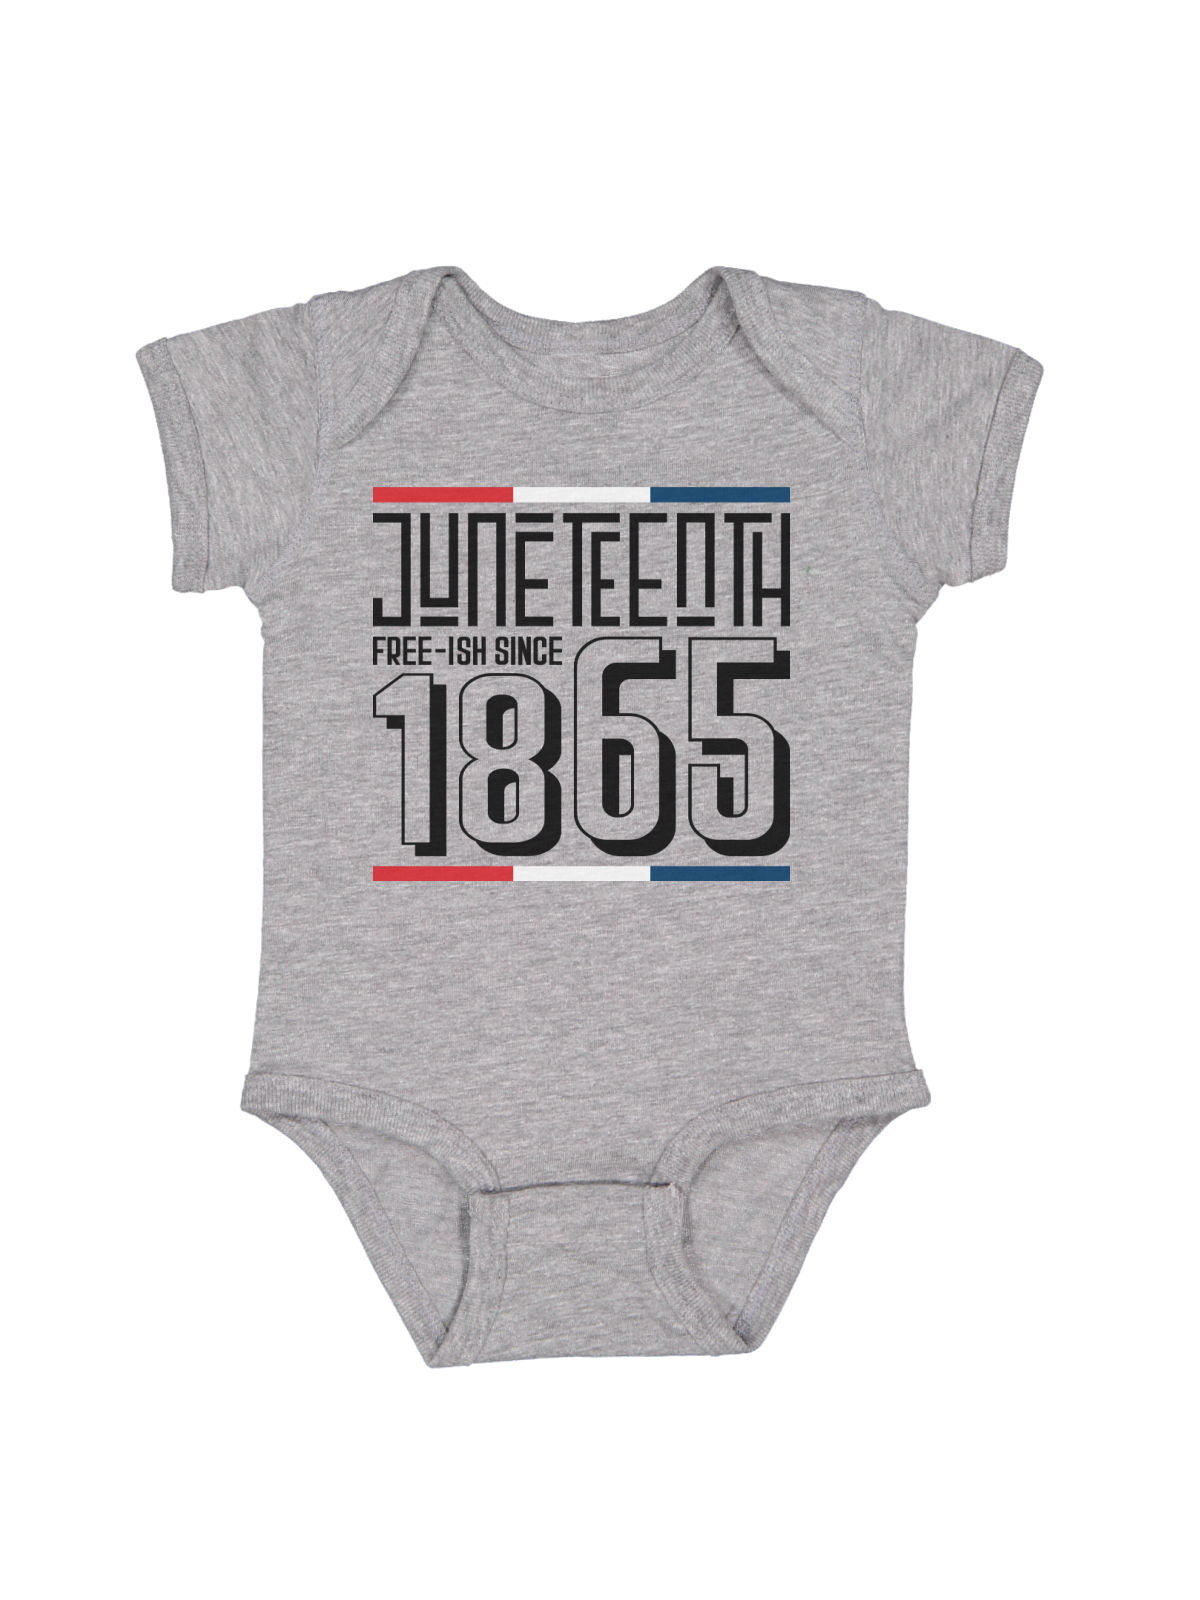 Free-ish Since 1865 Infant Juneteenth Bodysuit